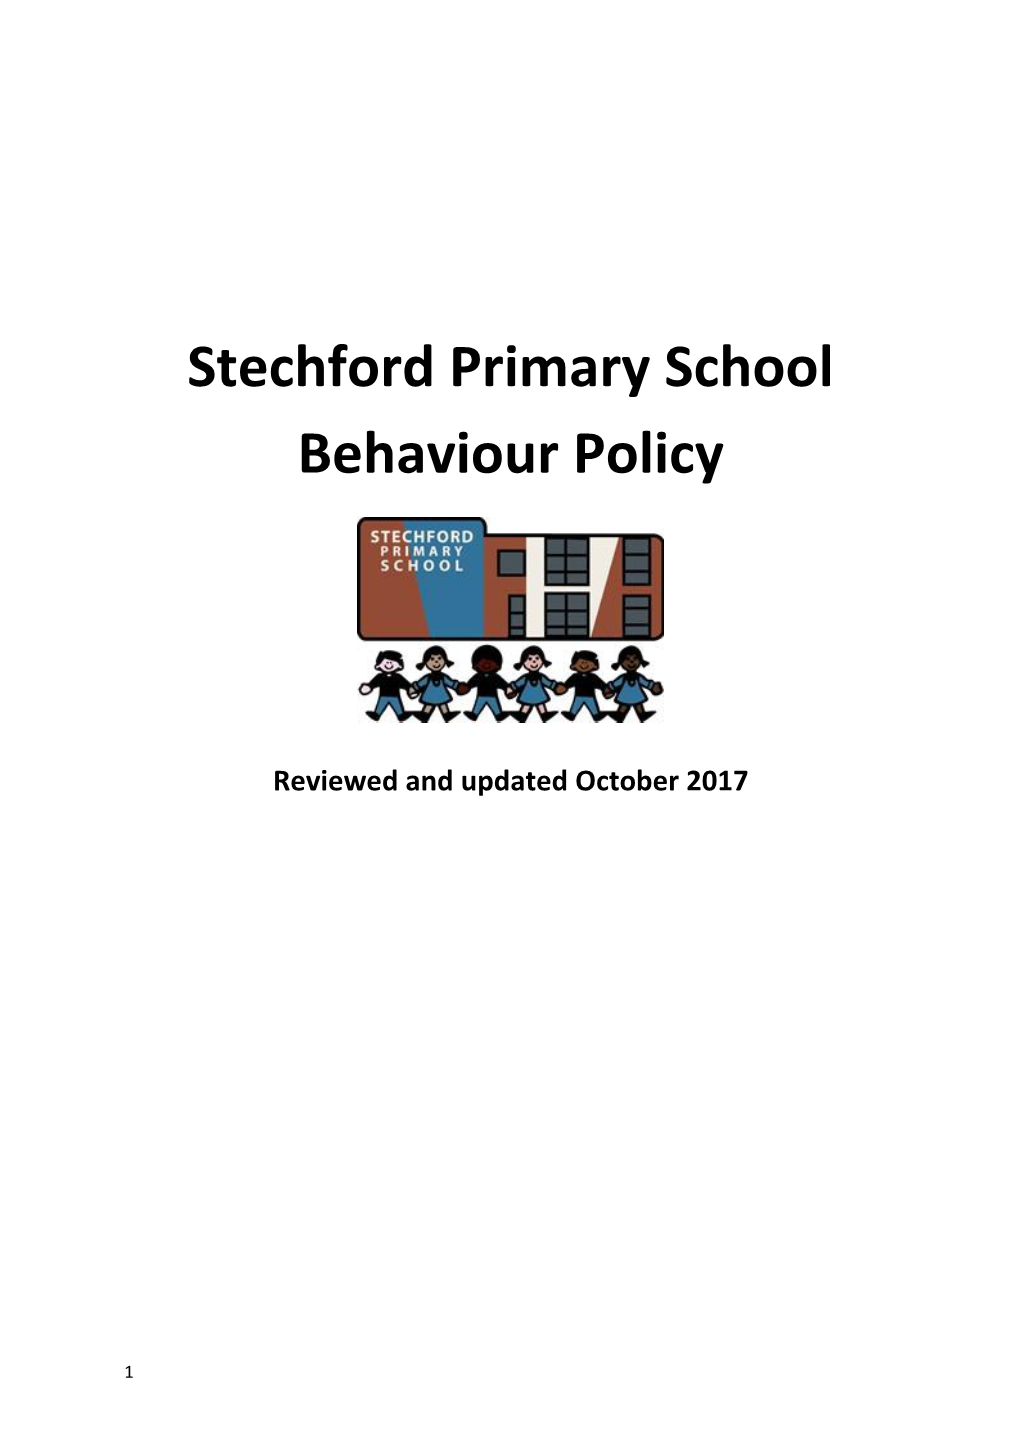 Stechford Primary School Behaviour Policy